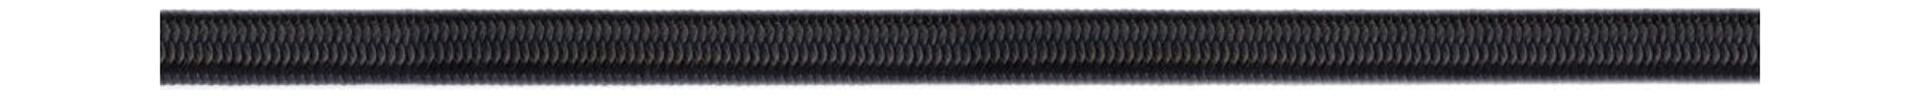 Шнур эластичный SEA Black, d 10 мм, L 100 м